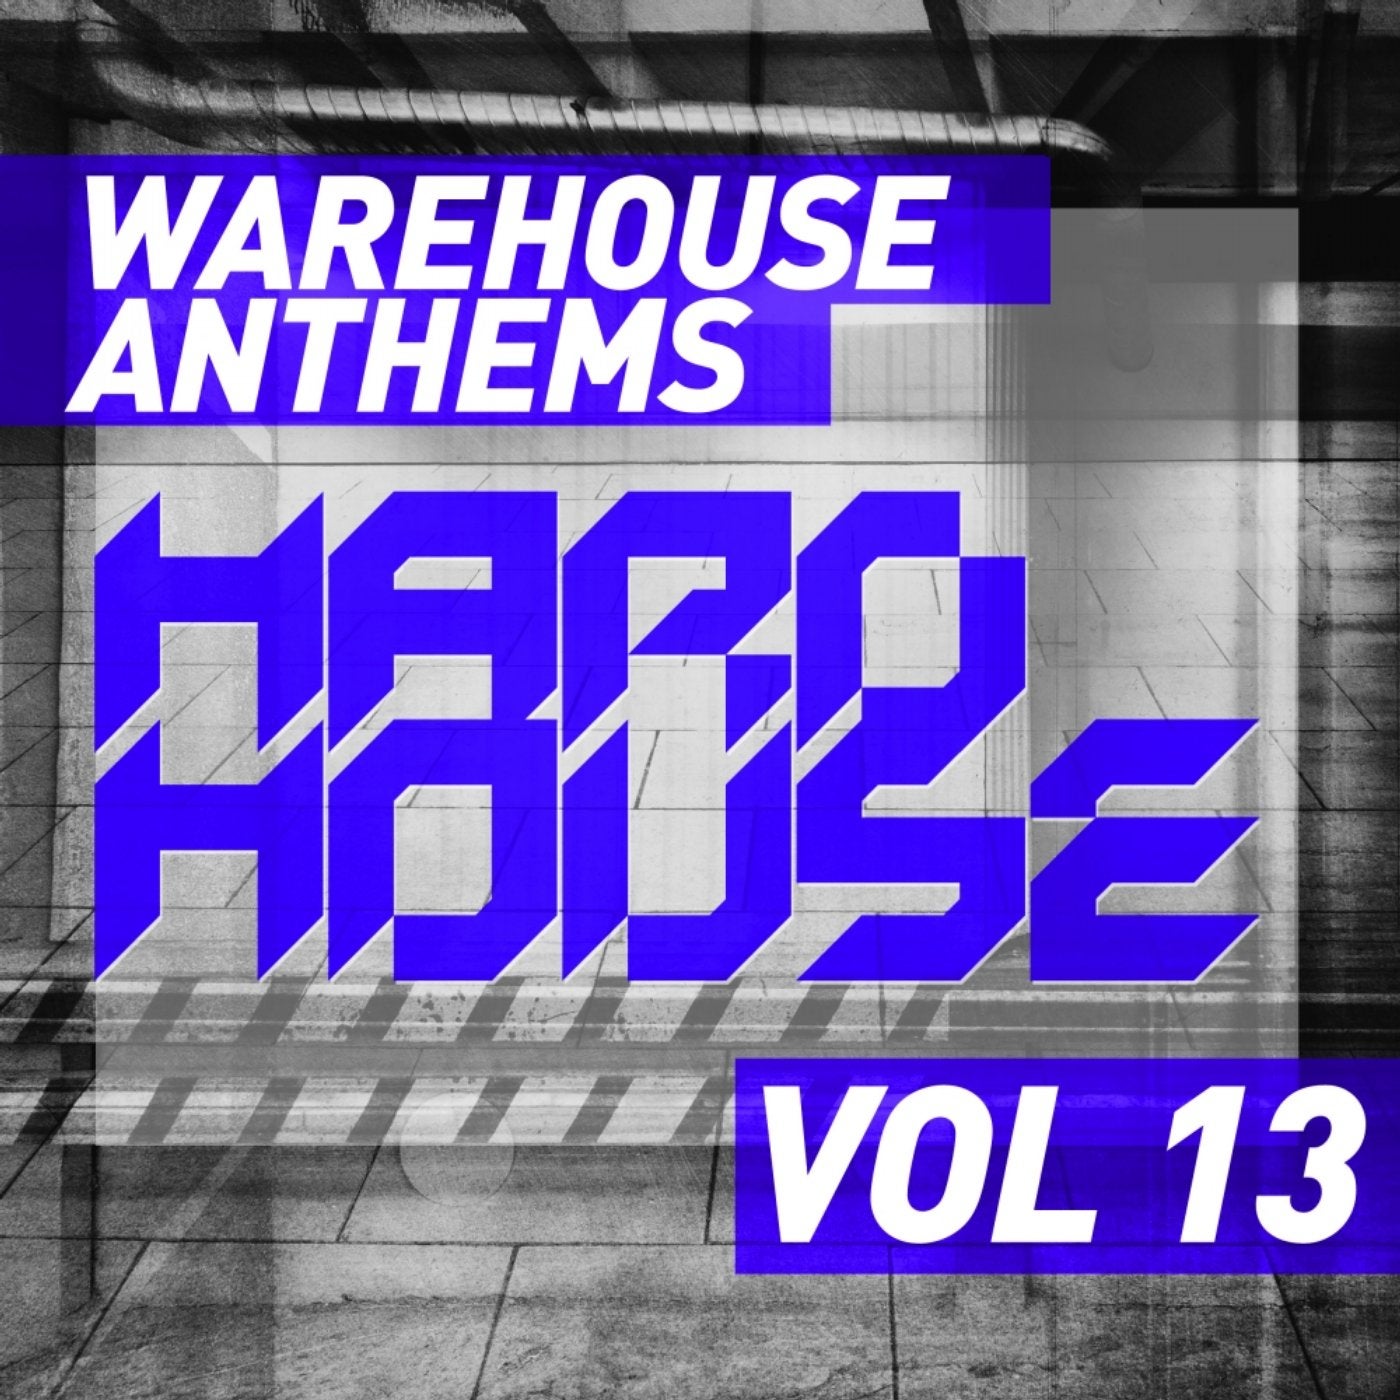 Warehouse Anthems: Hard House, Vol. 13